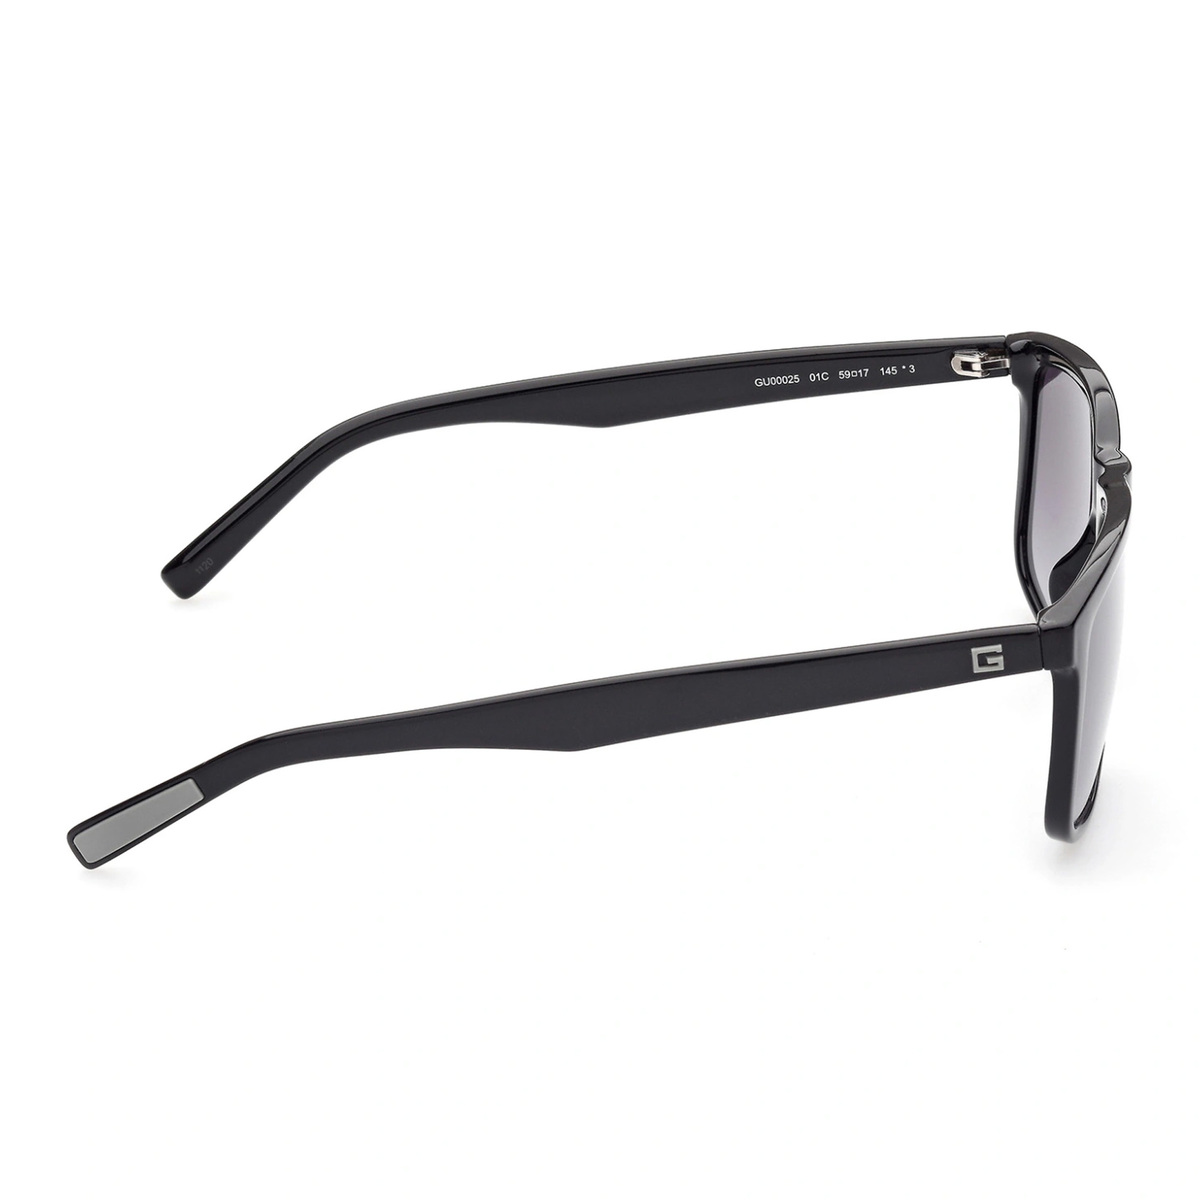 Guess Men's Square Sunglasses, Grey Mirror, GU00025 01C